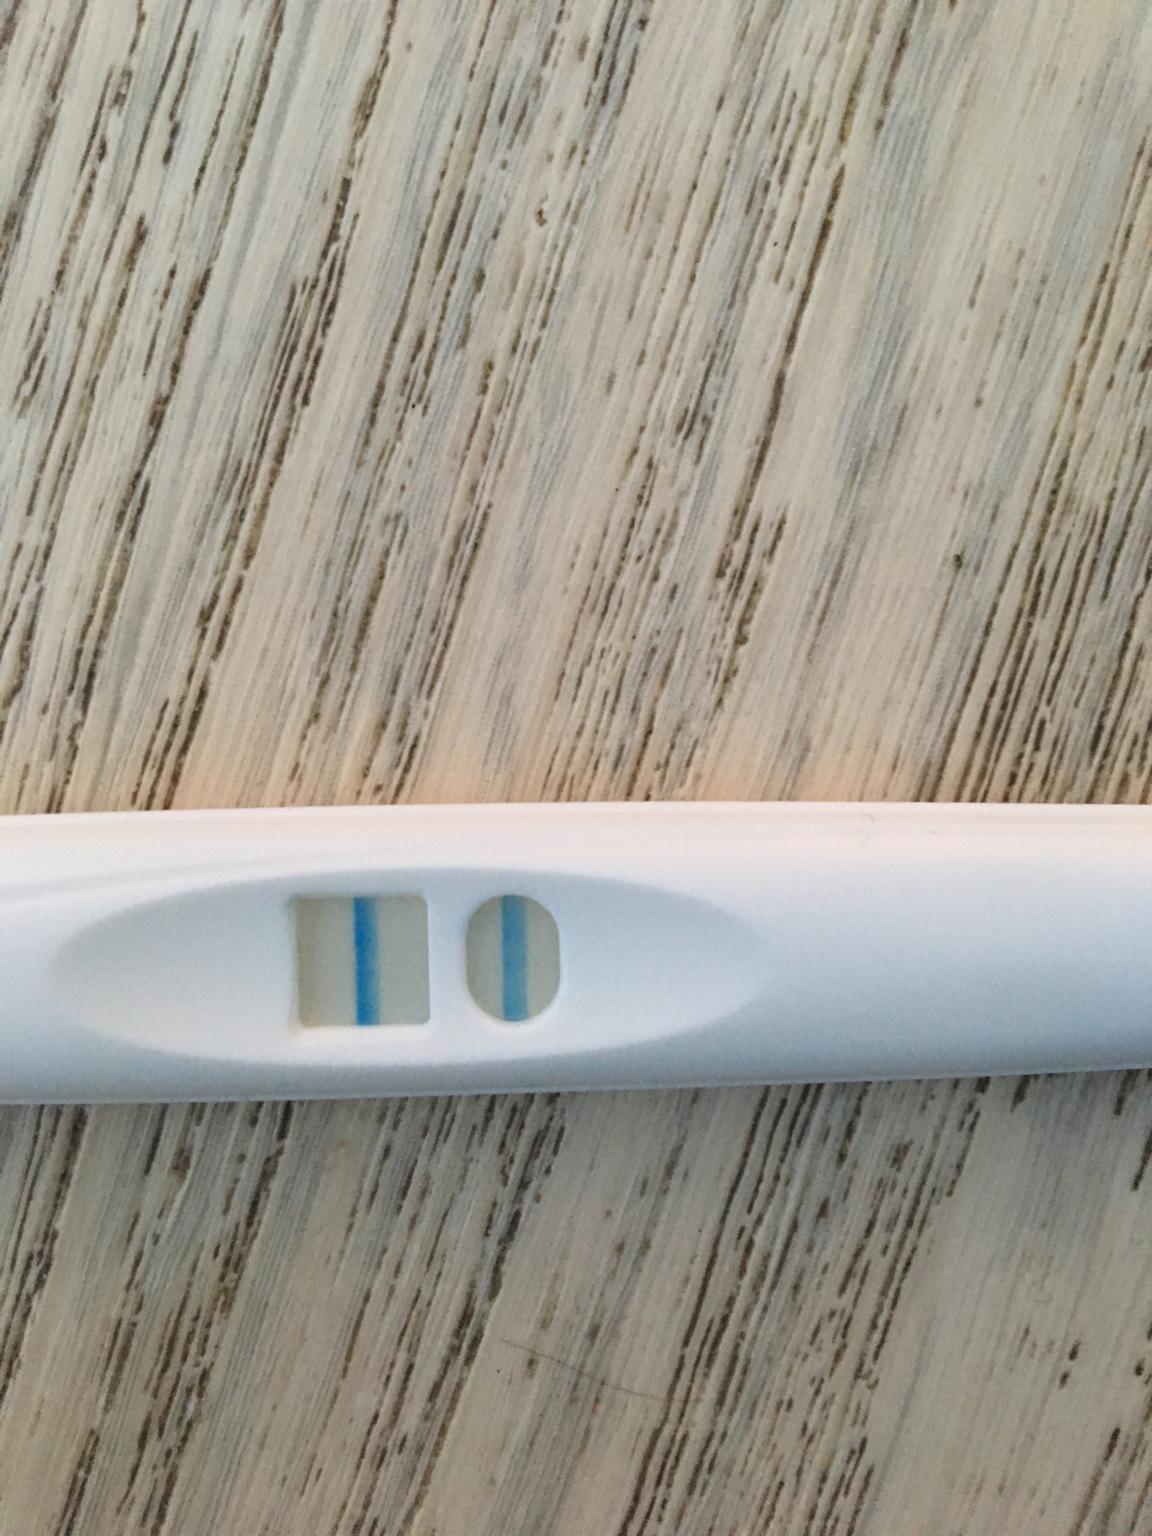 tesco ovulation test instructions